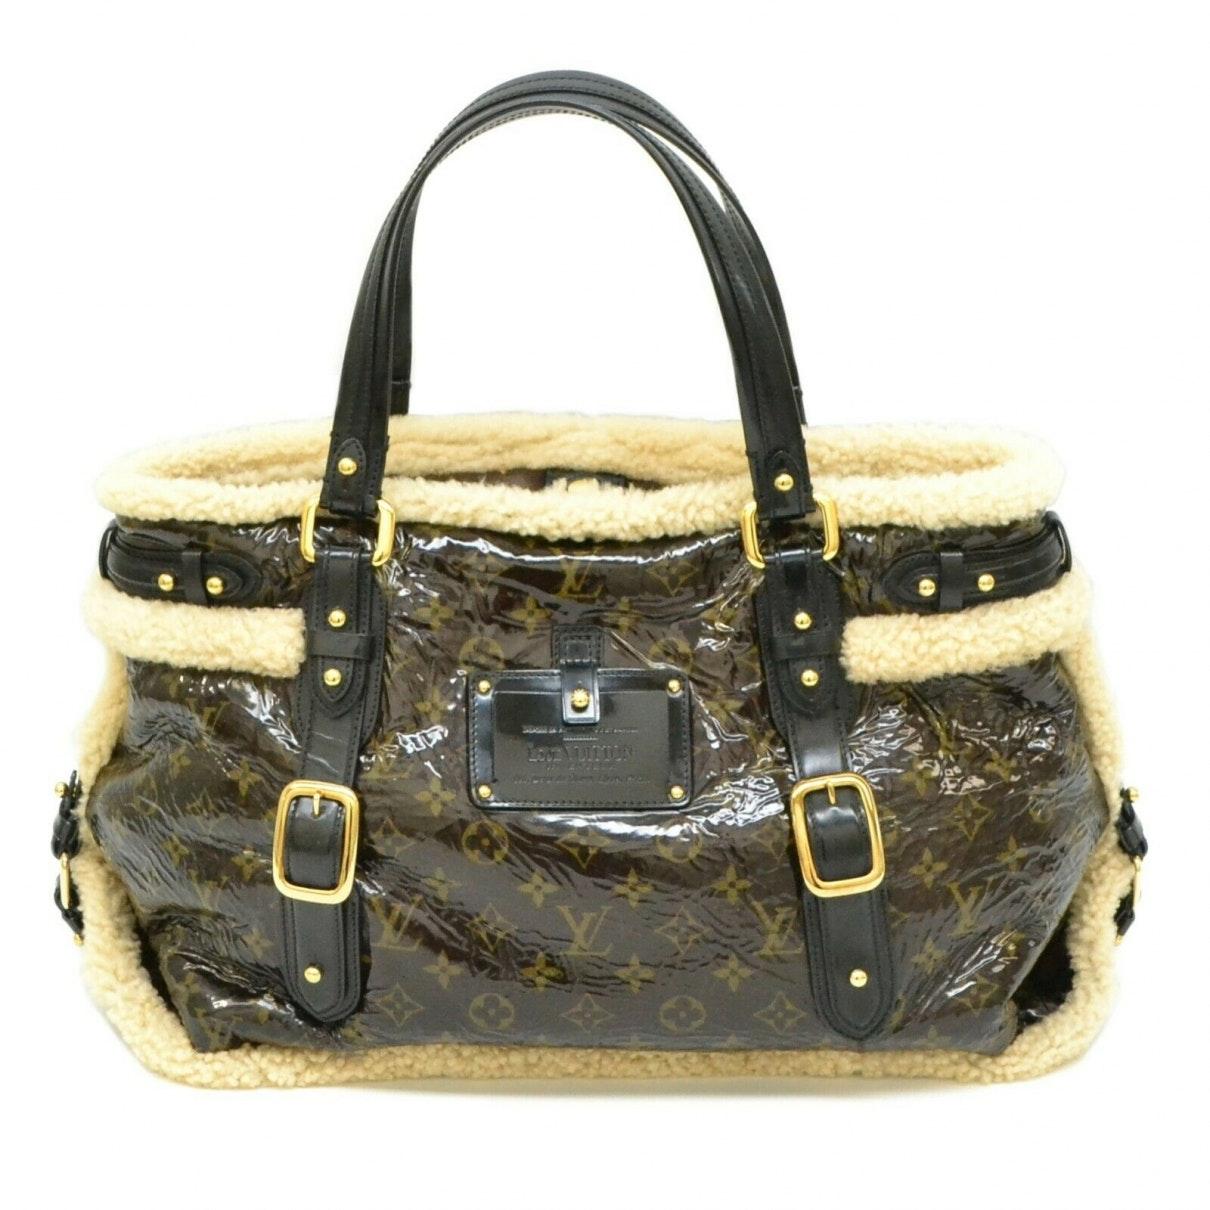 Louis Vuitton Patent Leather Handbag in Black - Lyst